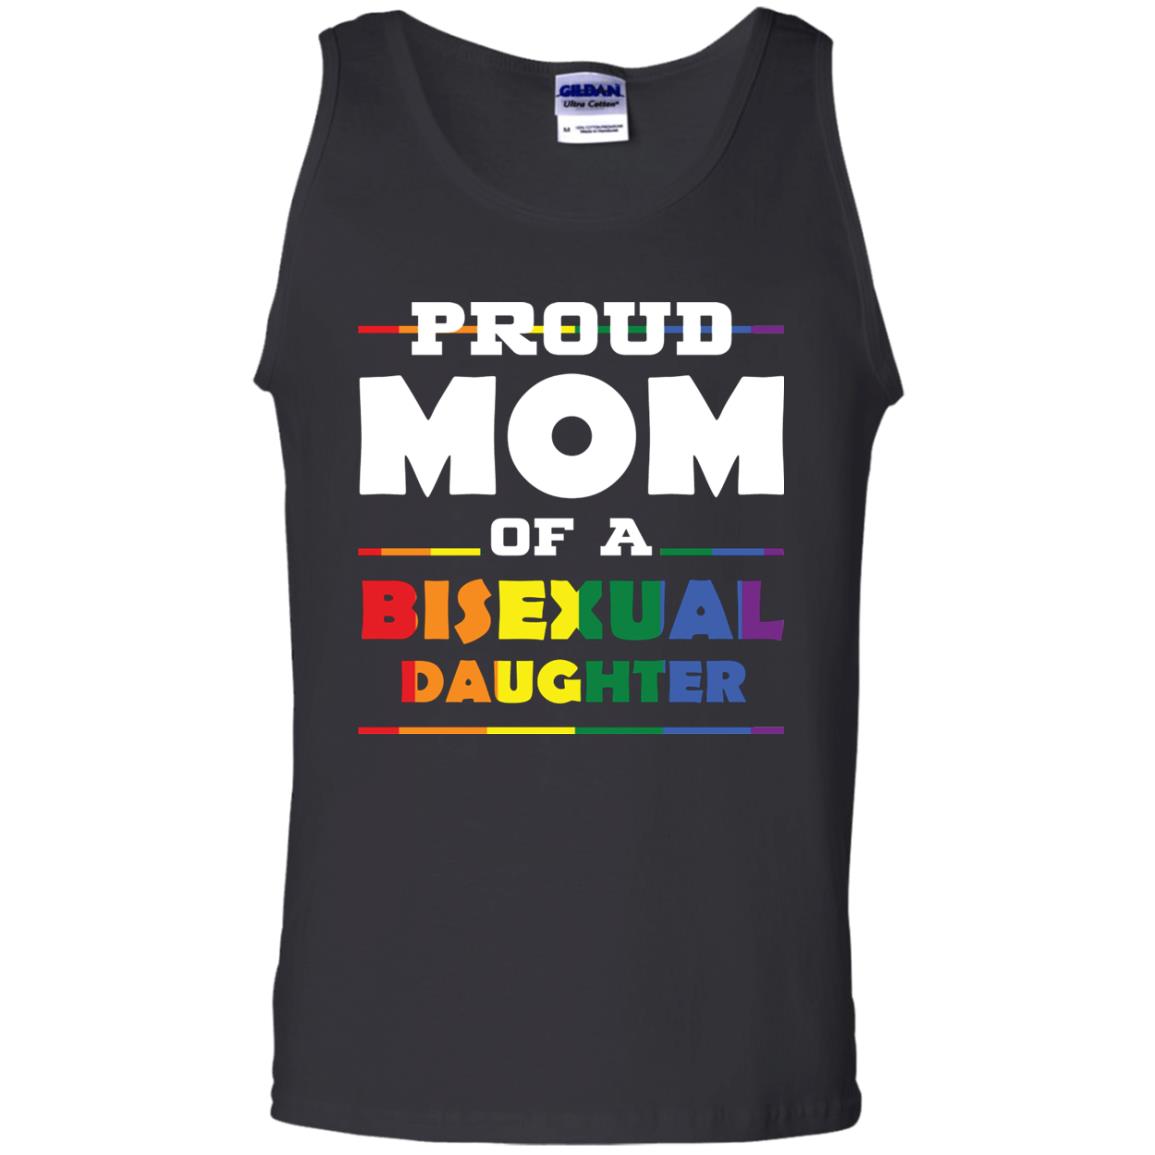 Proud Mom Of A Bisexual Daughter Mom Supports Bisexual Pride 2018 ShirtG220 Gildan 100% Cotton Tank Top